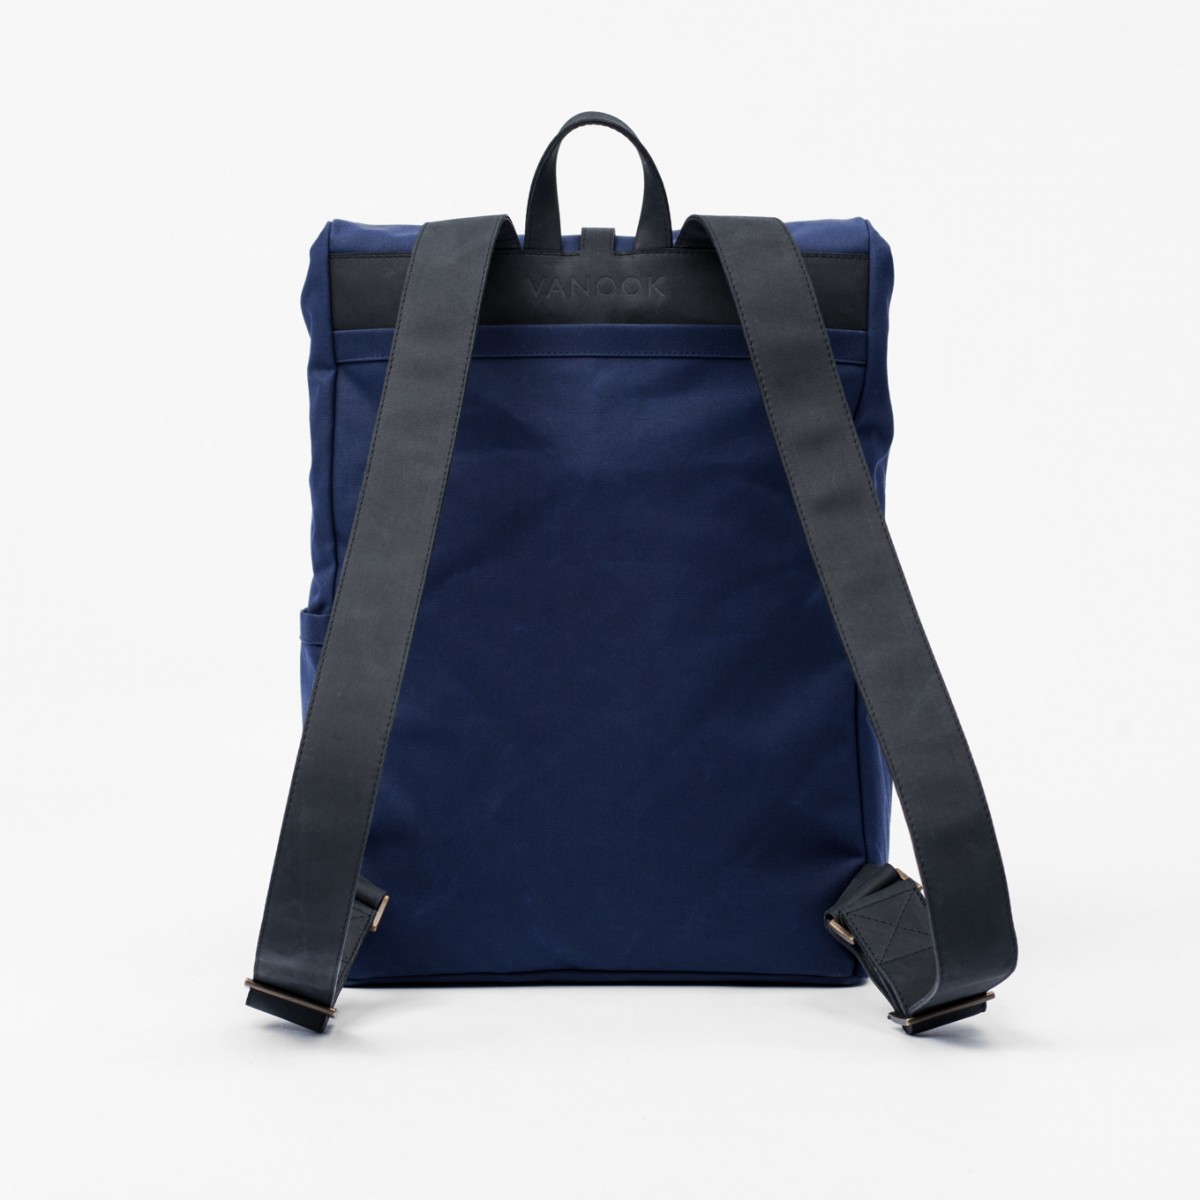 VANOOK Backpack Navy / Charcoal